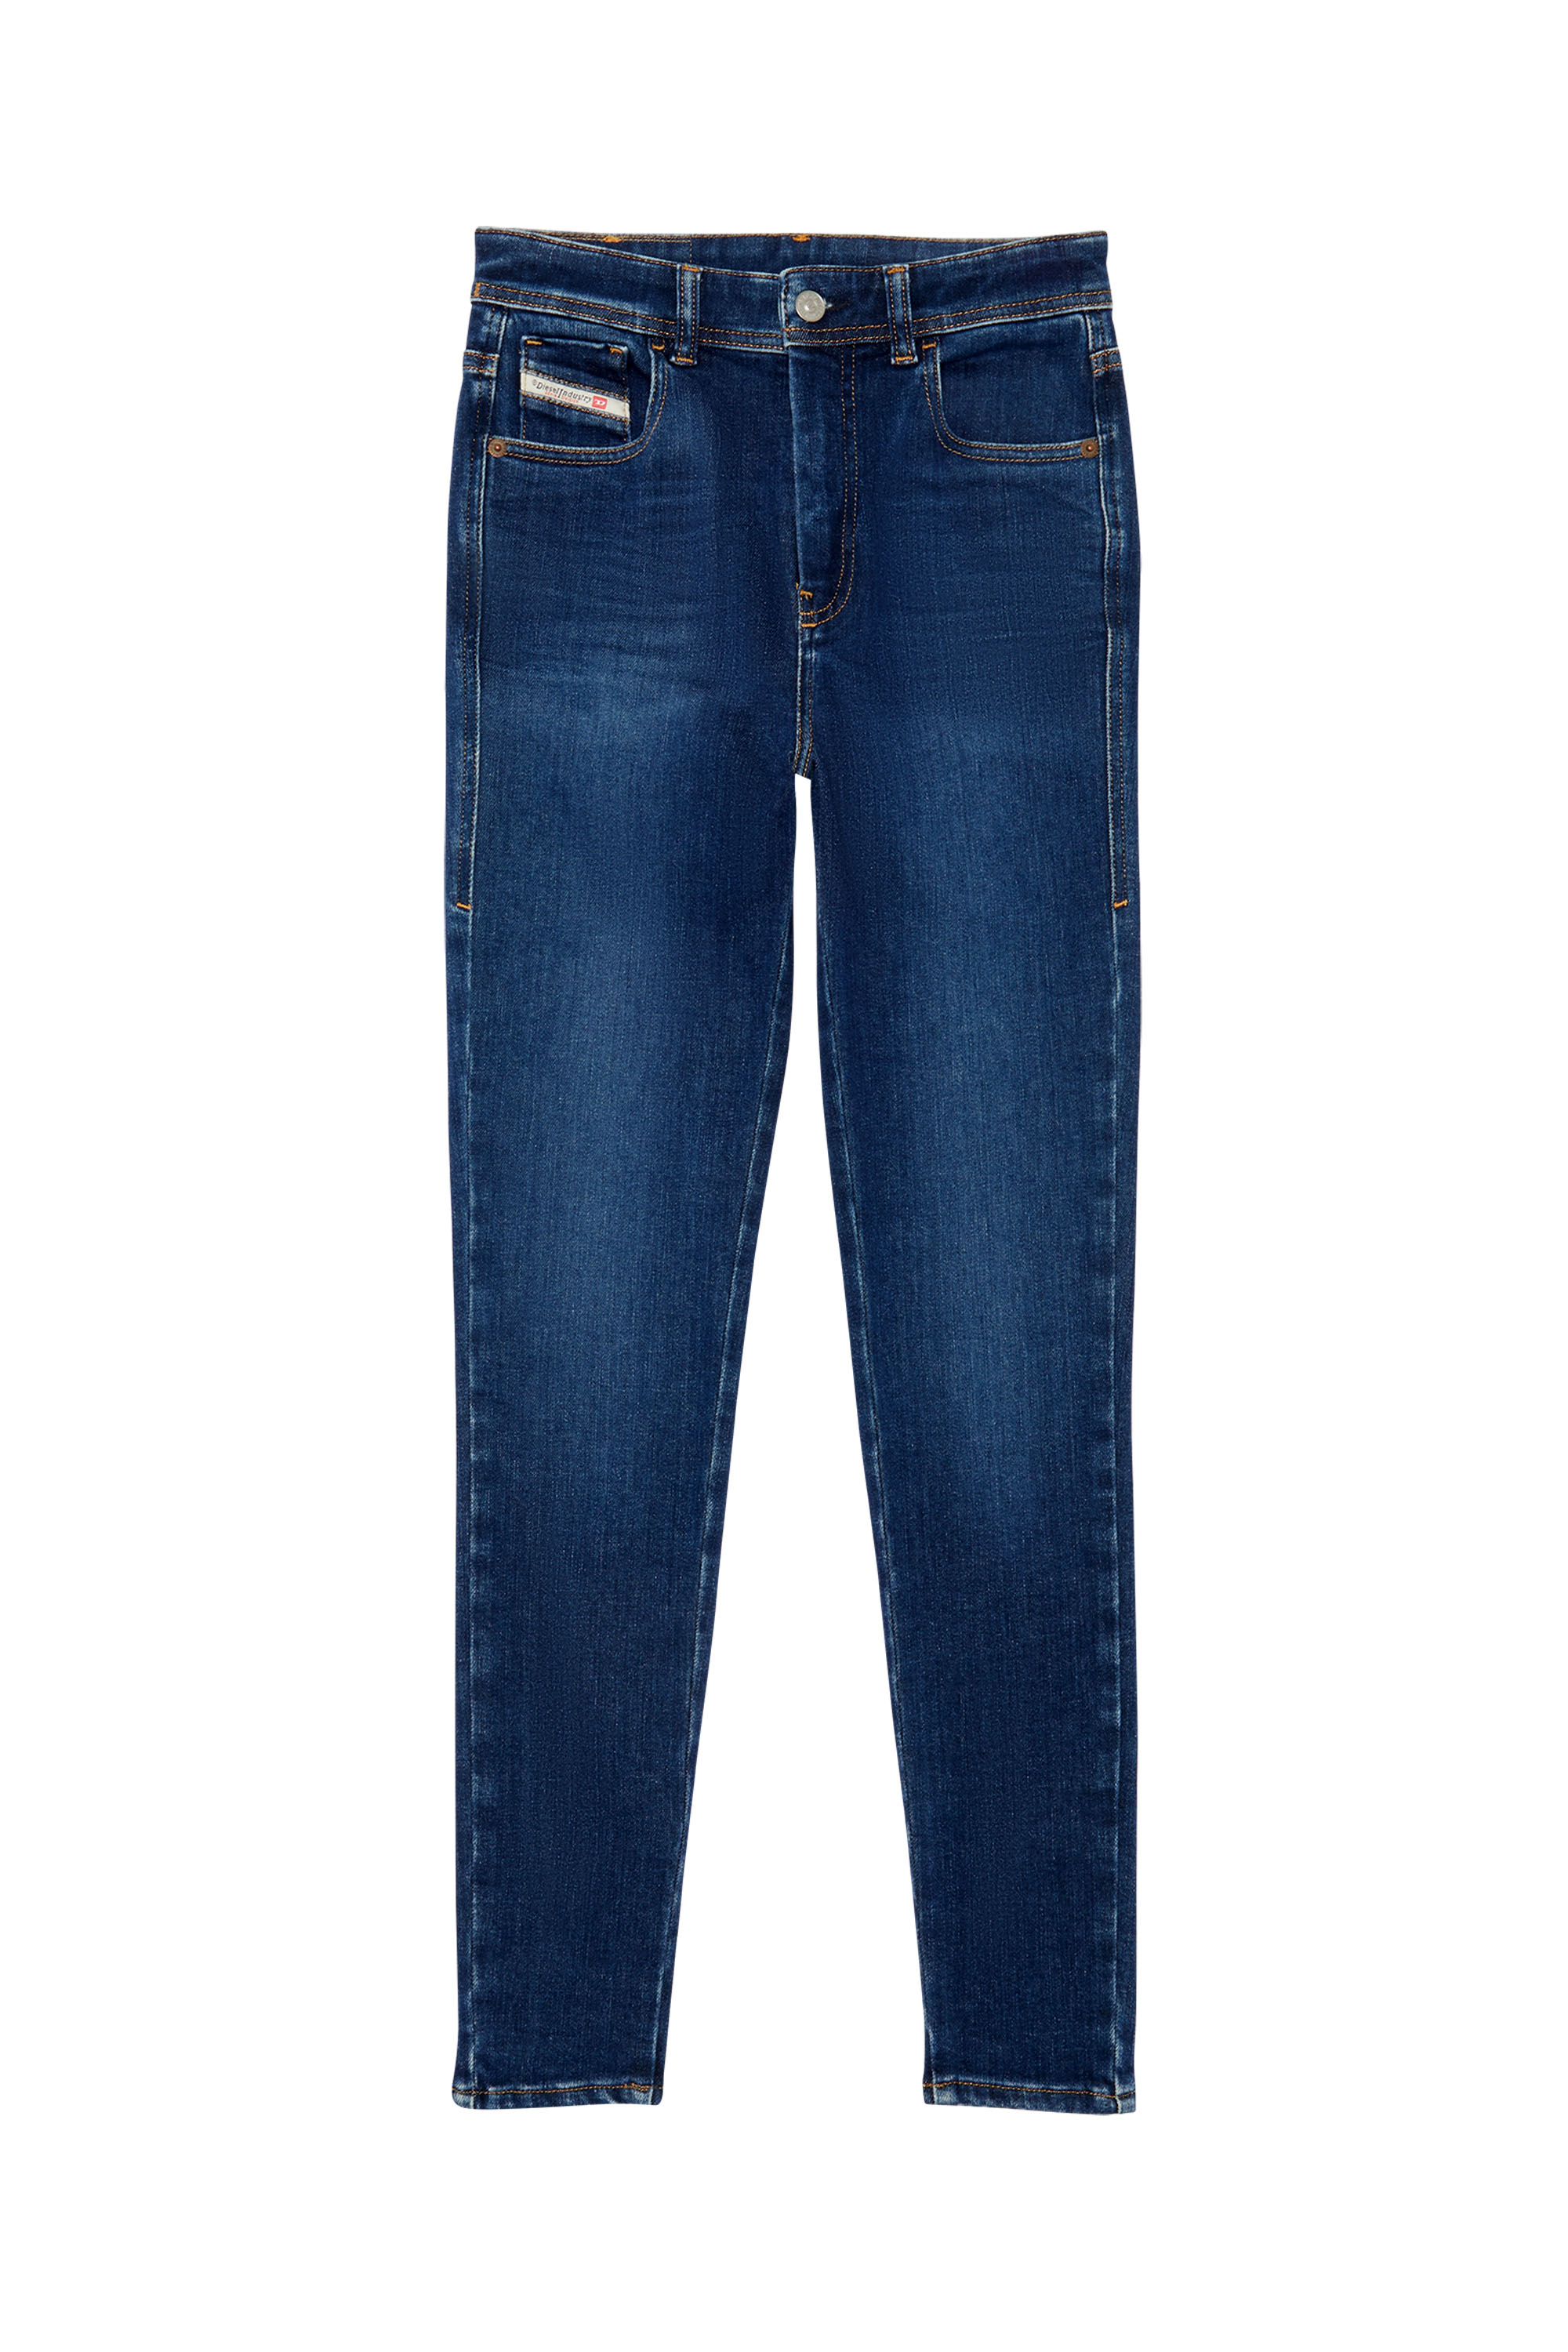 Super skinny Jeans 1984 Slandy-High 09C19, Dark Blue - Jeans